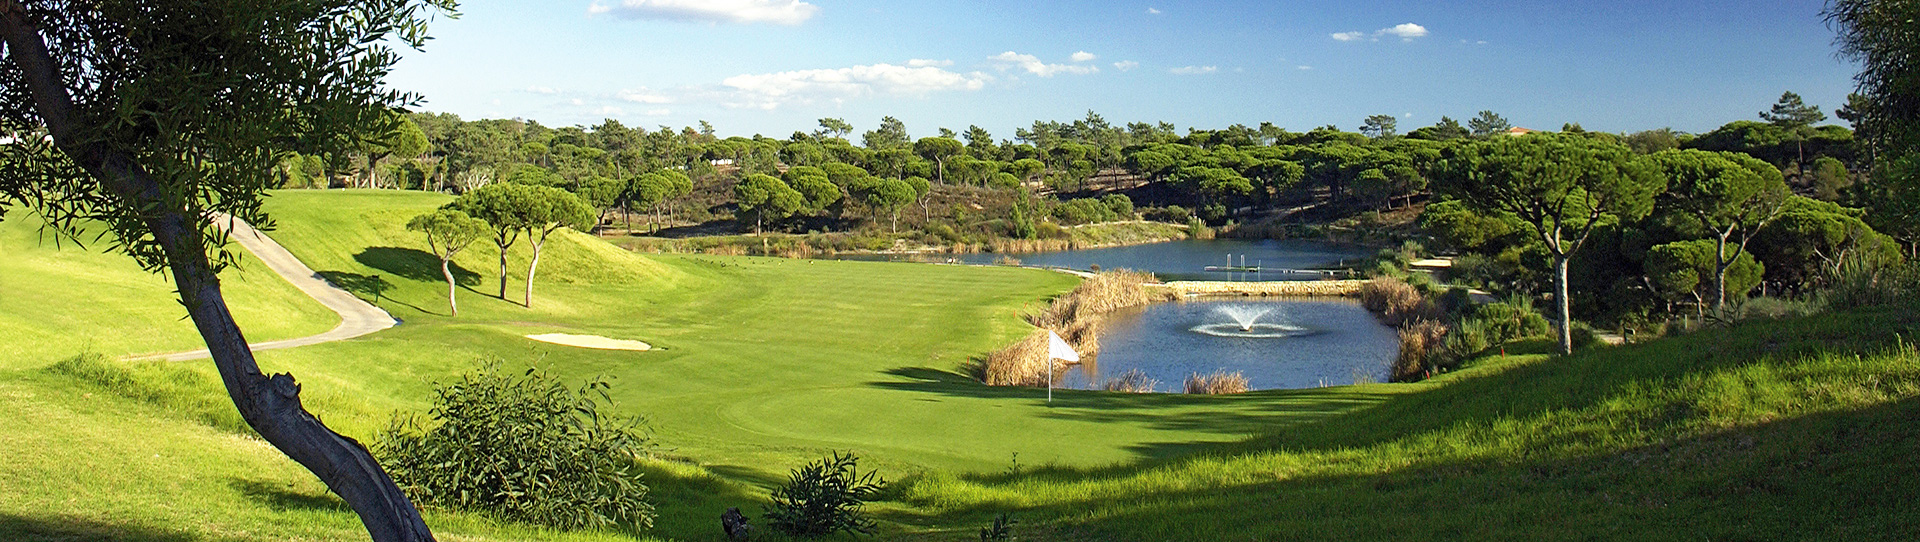 Portugal golf courses - Vale do Lobo Royal - Photo 2